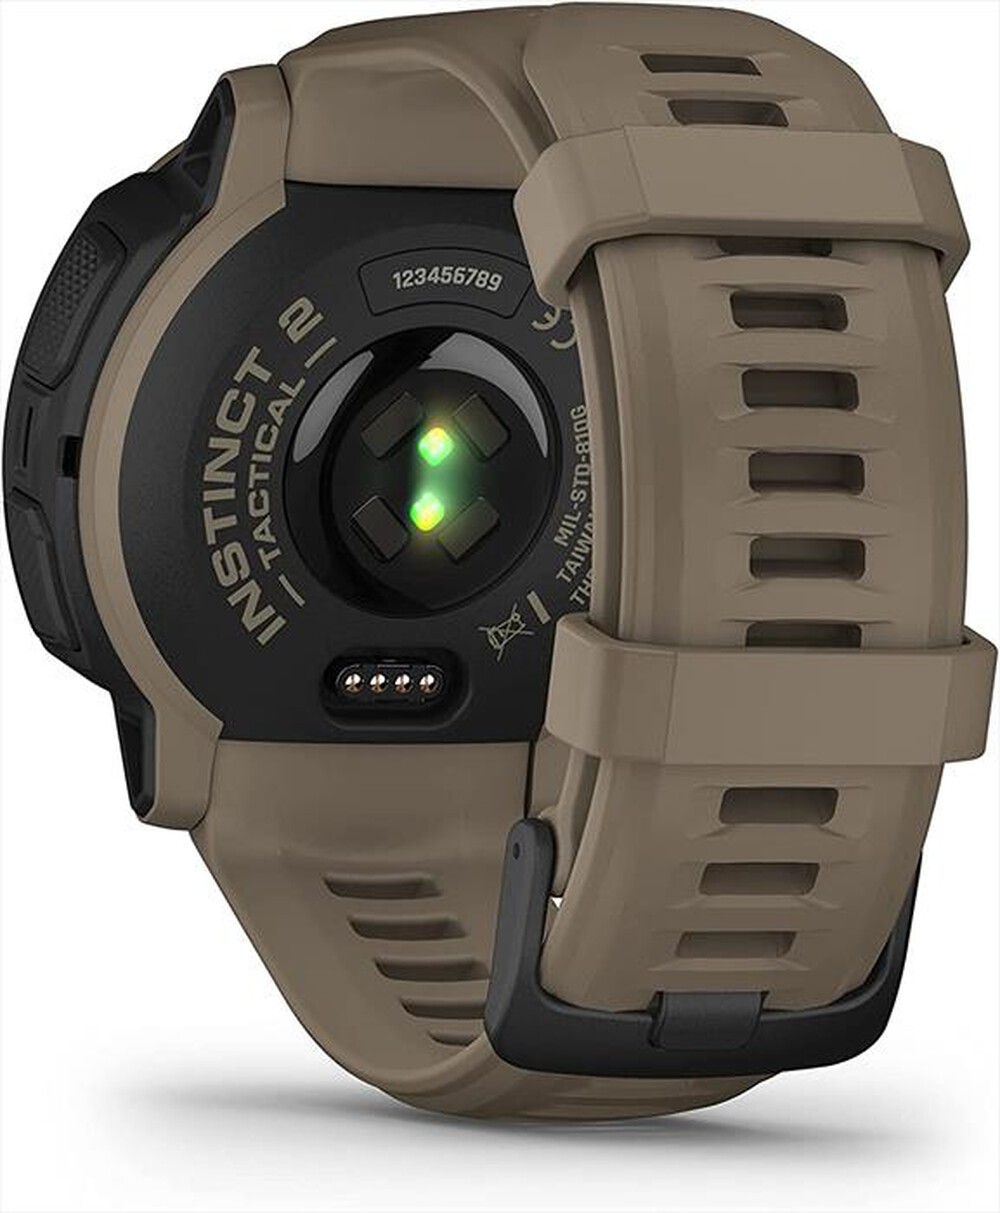 "GARMIN - Smart Watch Instinct 2 Solar - Tactical-Coyote Tan"